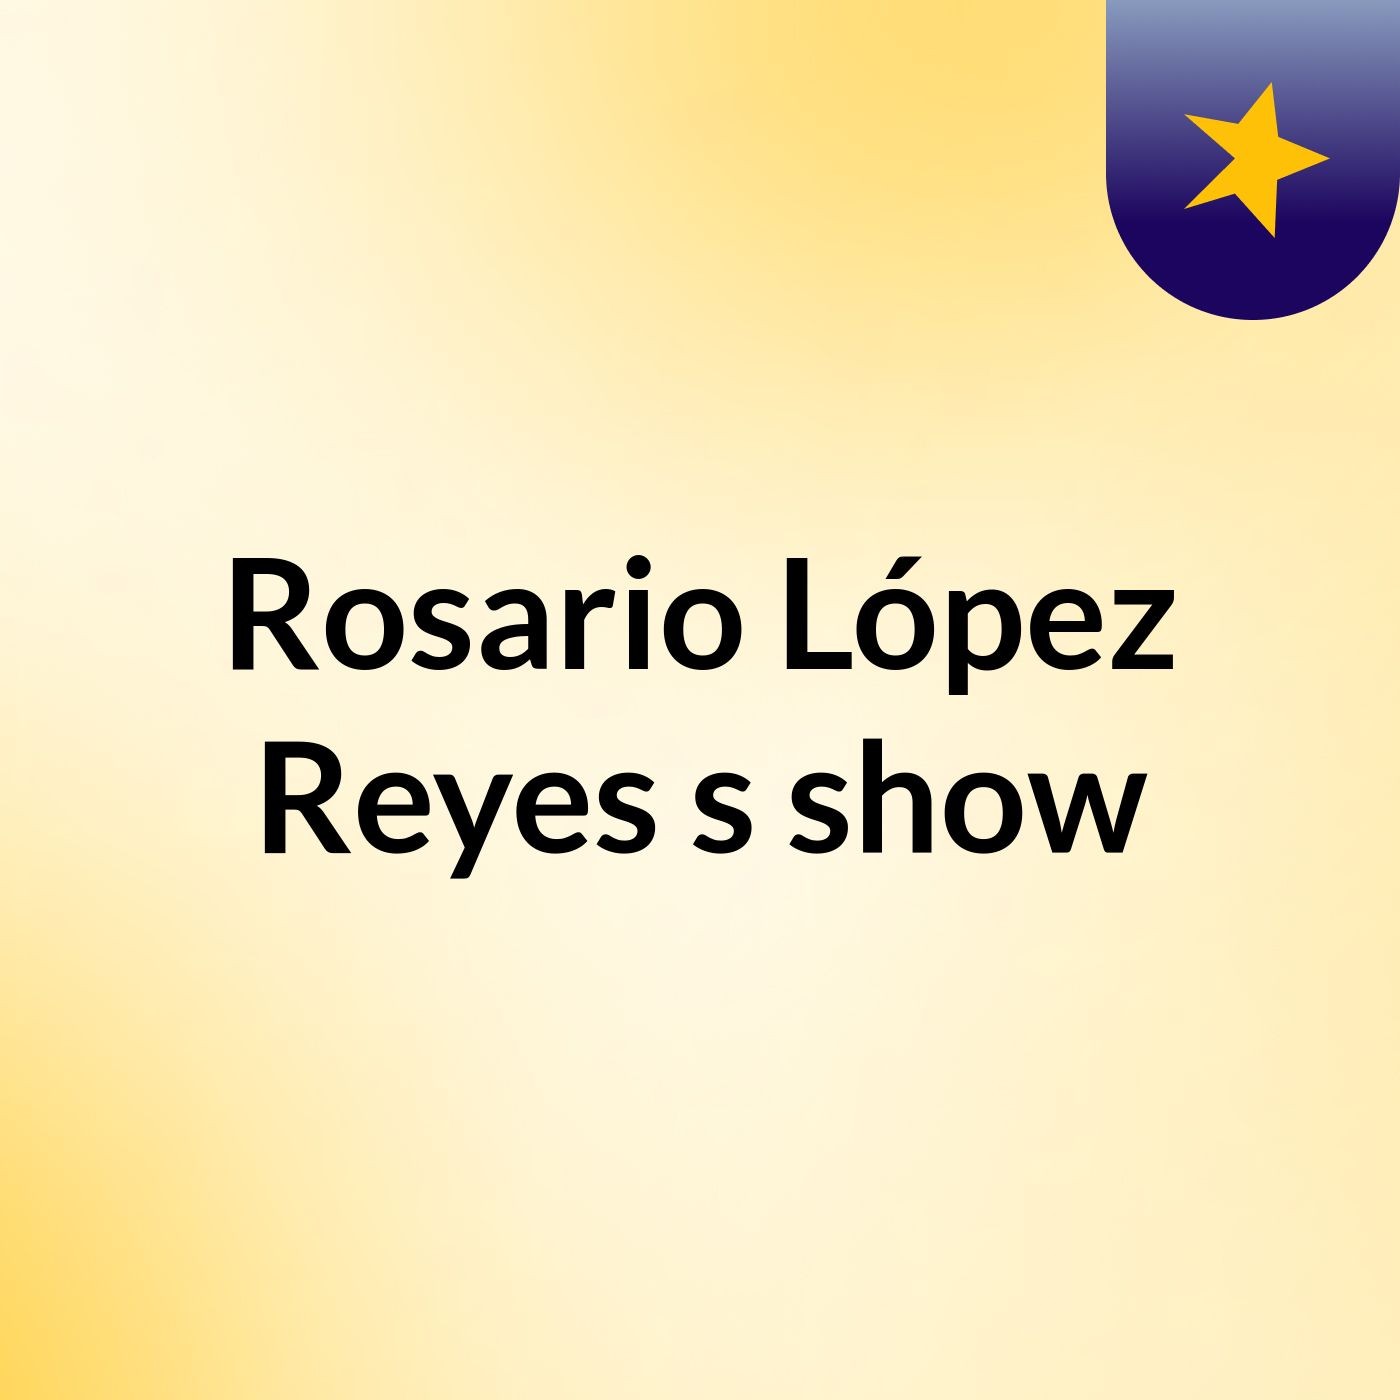 Episodio 4 - Rosario López Reyes's show